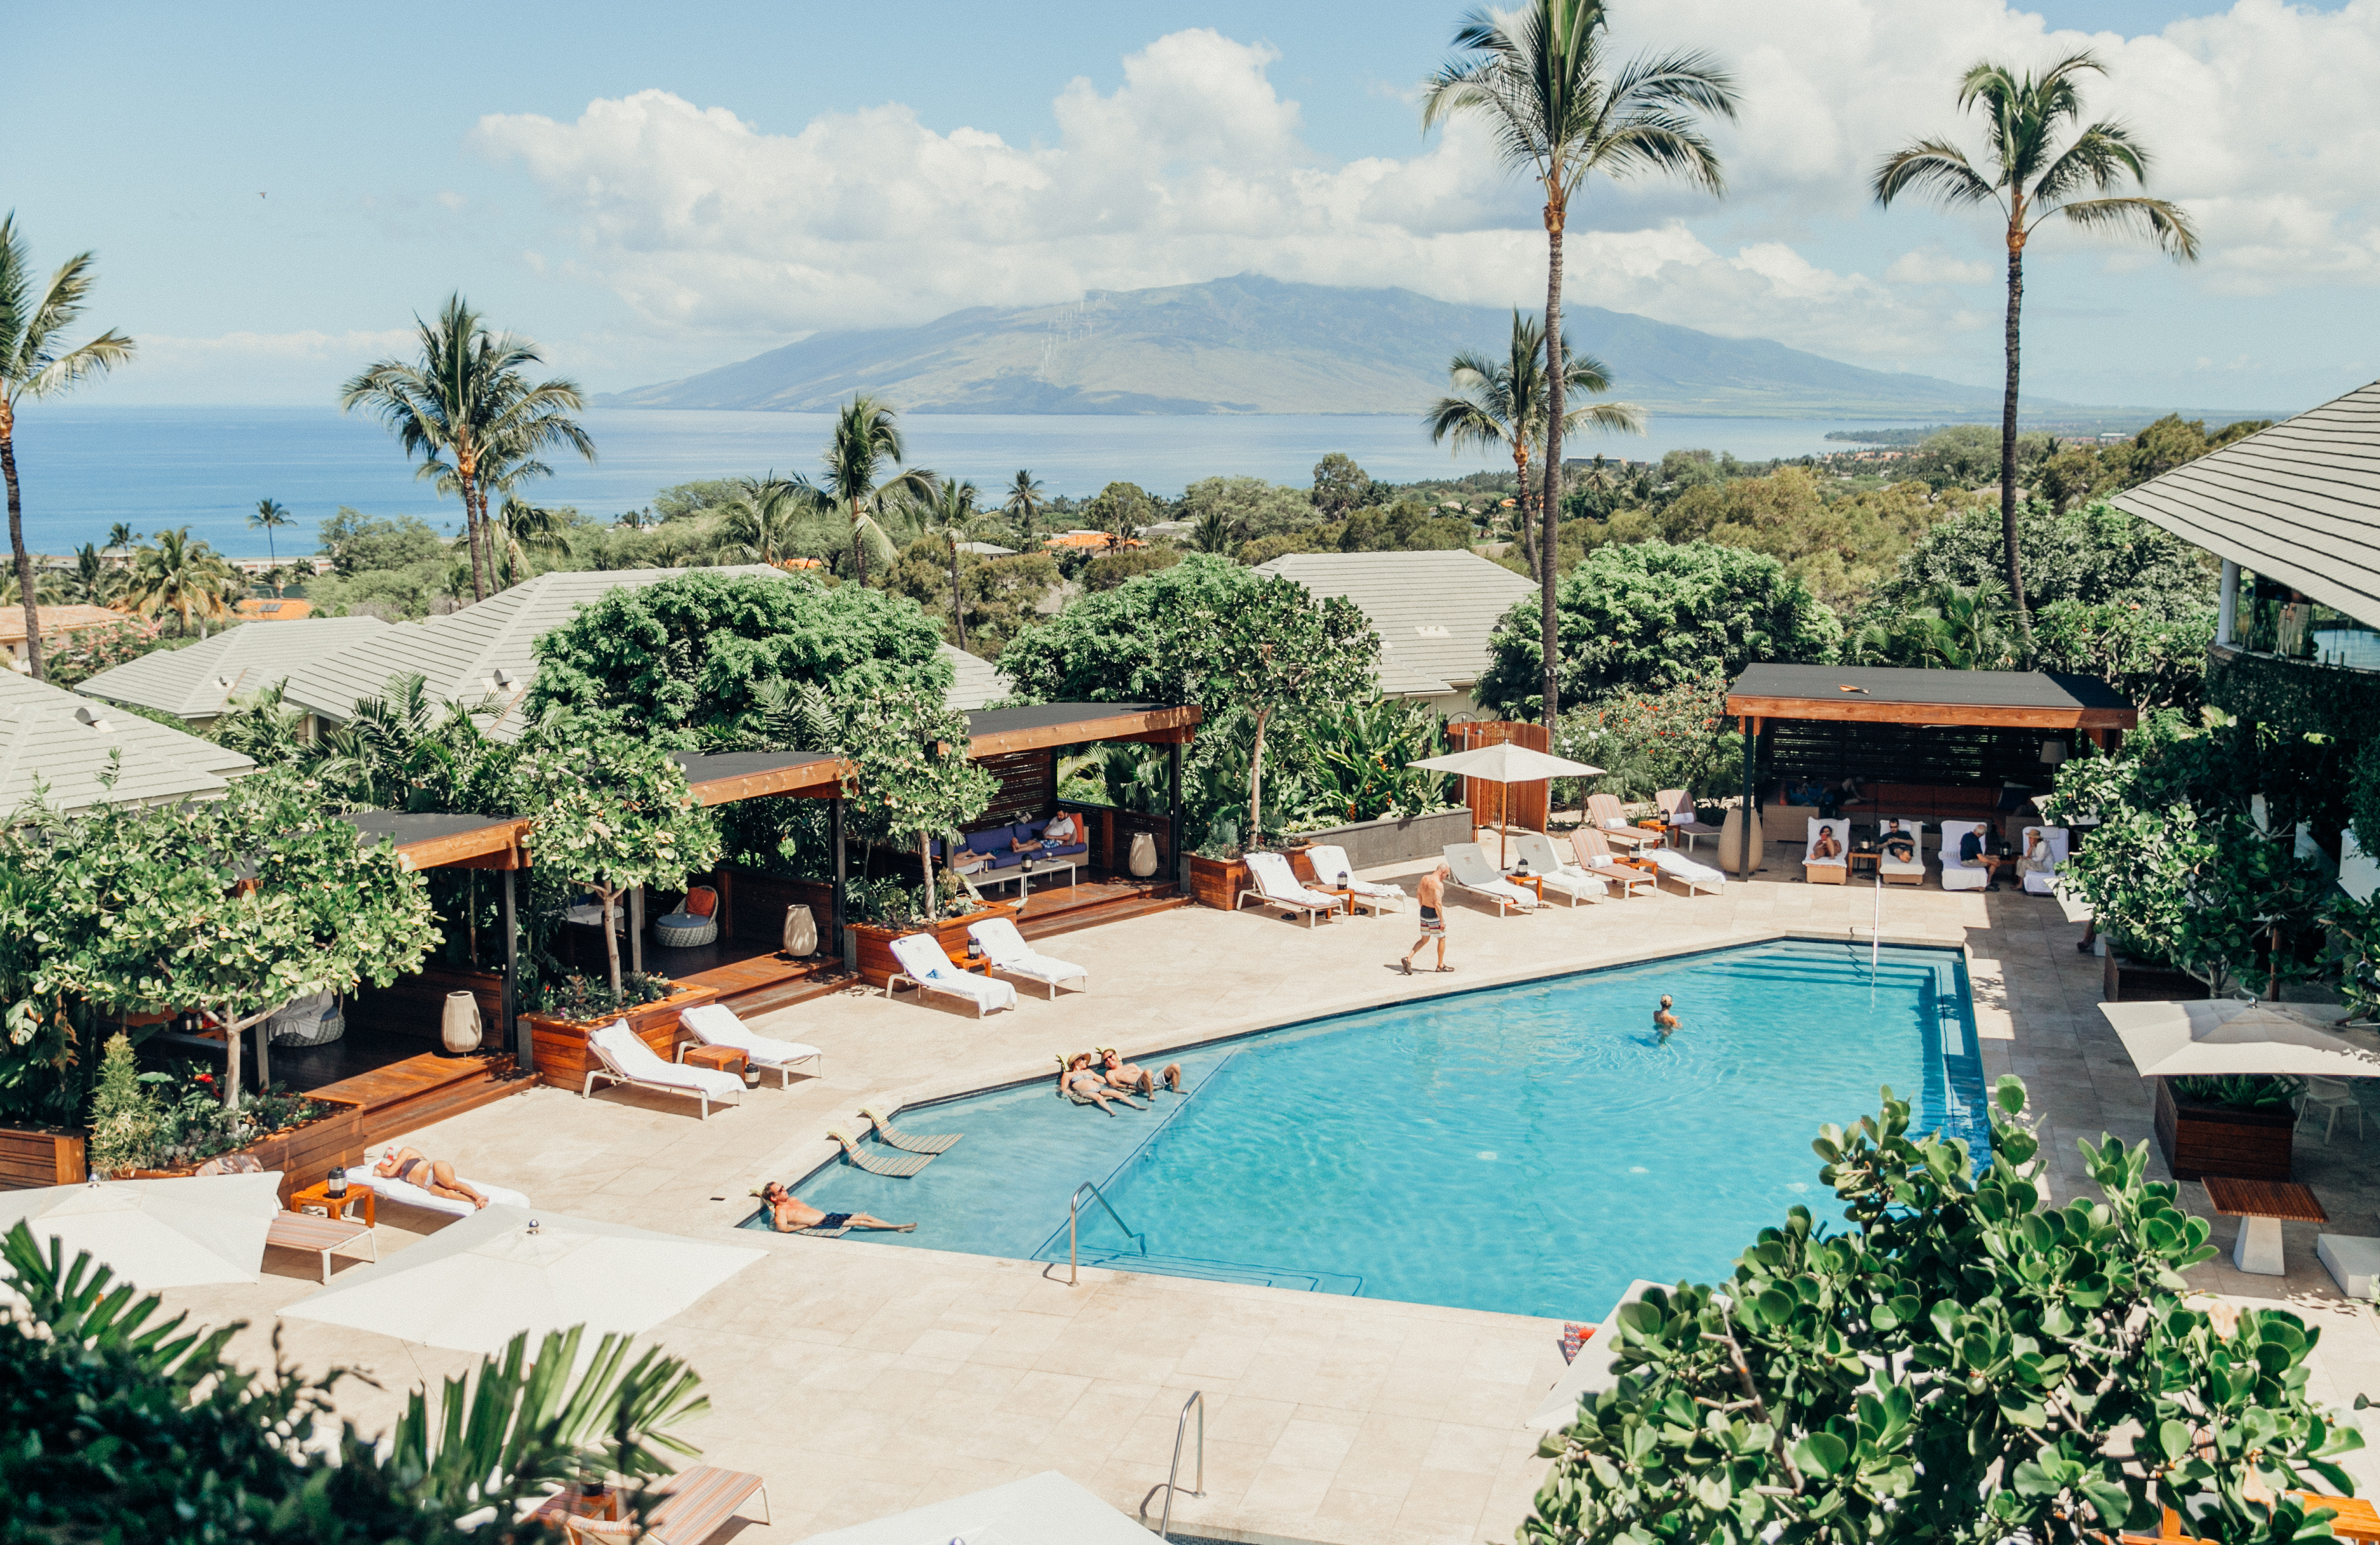 Best Hotels in Maui in this Maui Travel Guide via @elanaloo & elanaloo.com